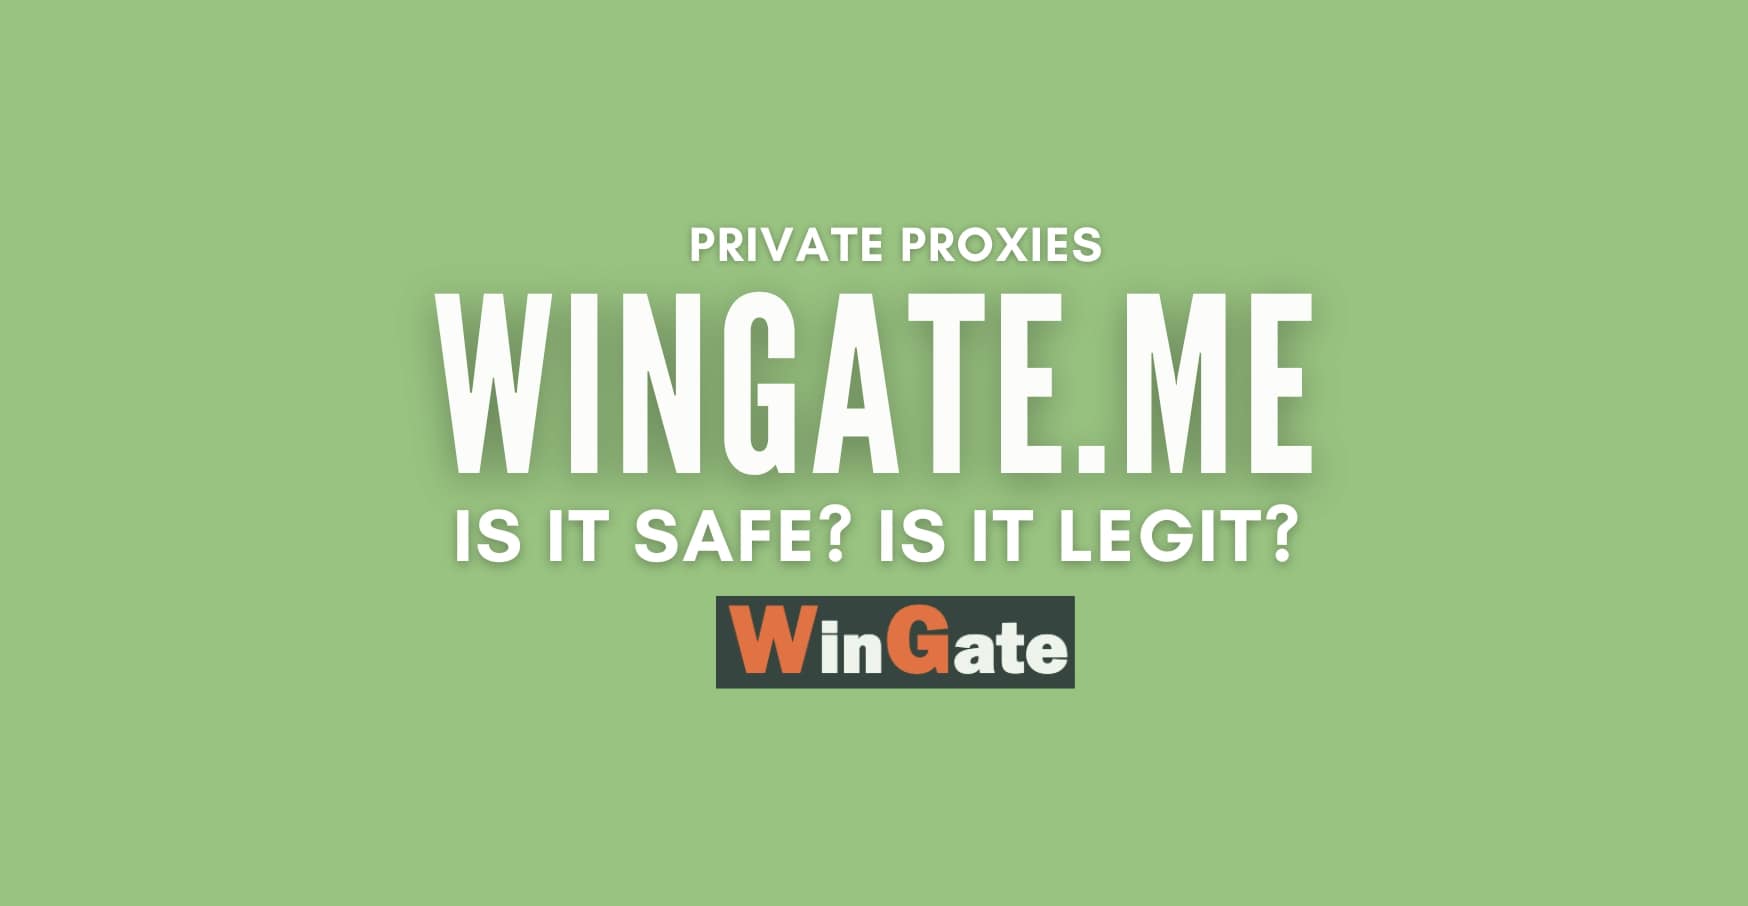 Wingate.me